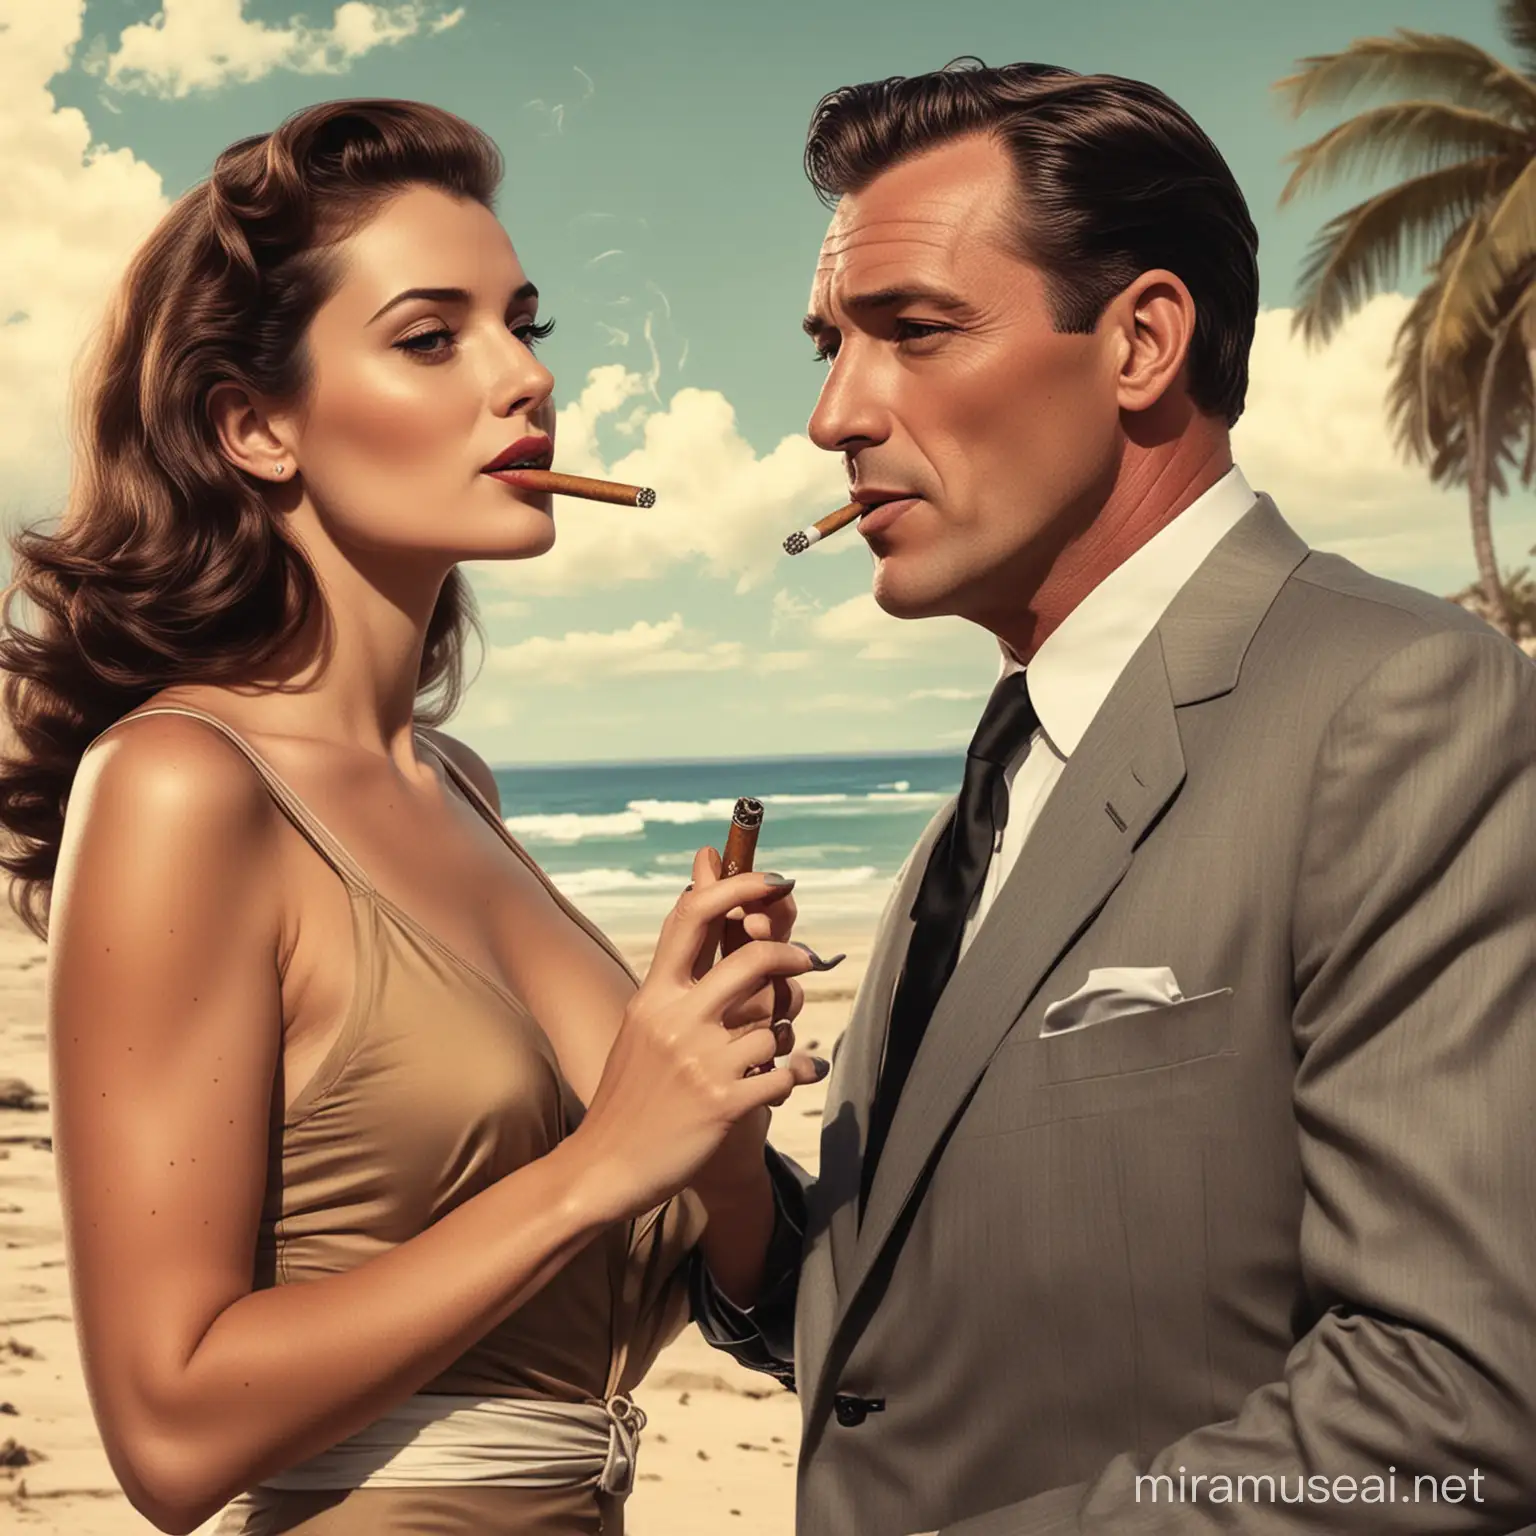 Vintage CIA Spy and Femme Fatale Enjoy Cigars on Seaside Retreat